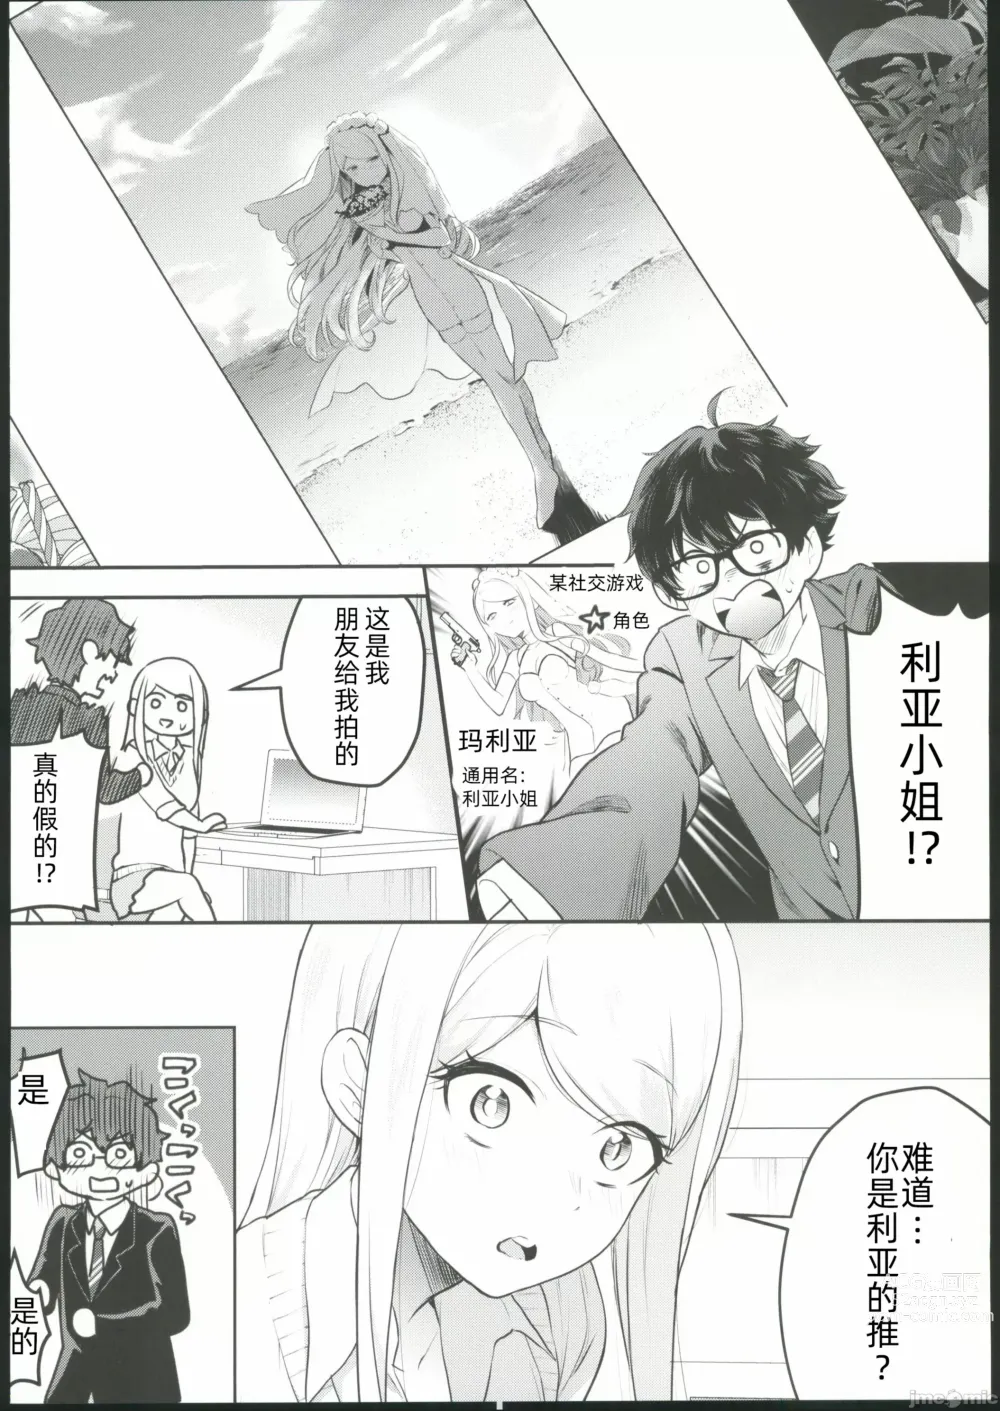 Page 5 of doujinshi cosplay女孩与亲密接触摄影会